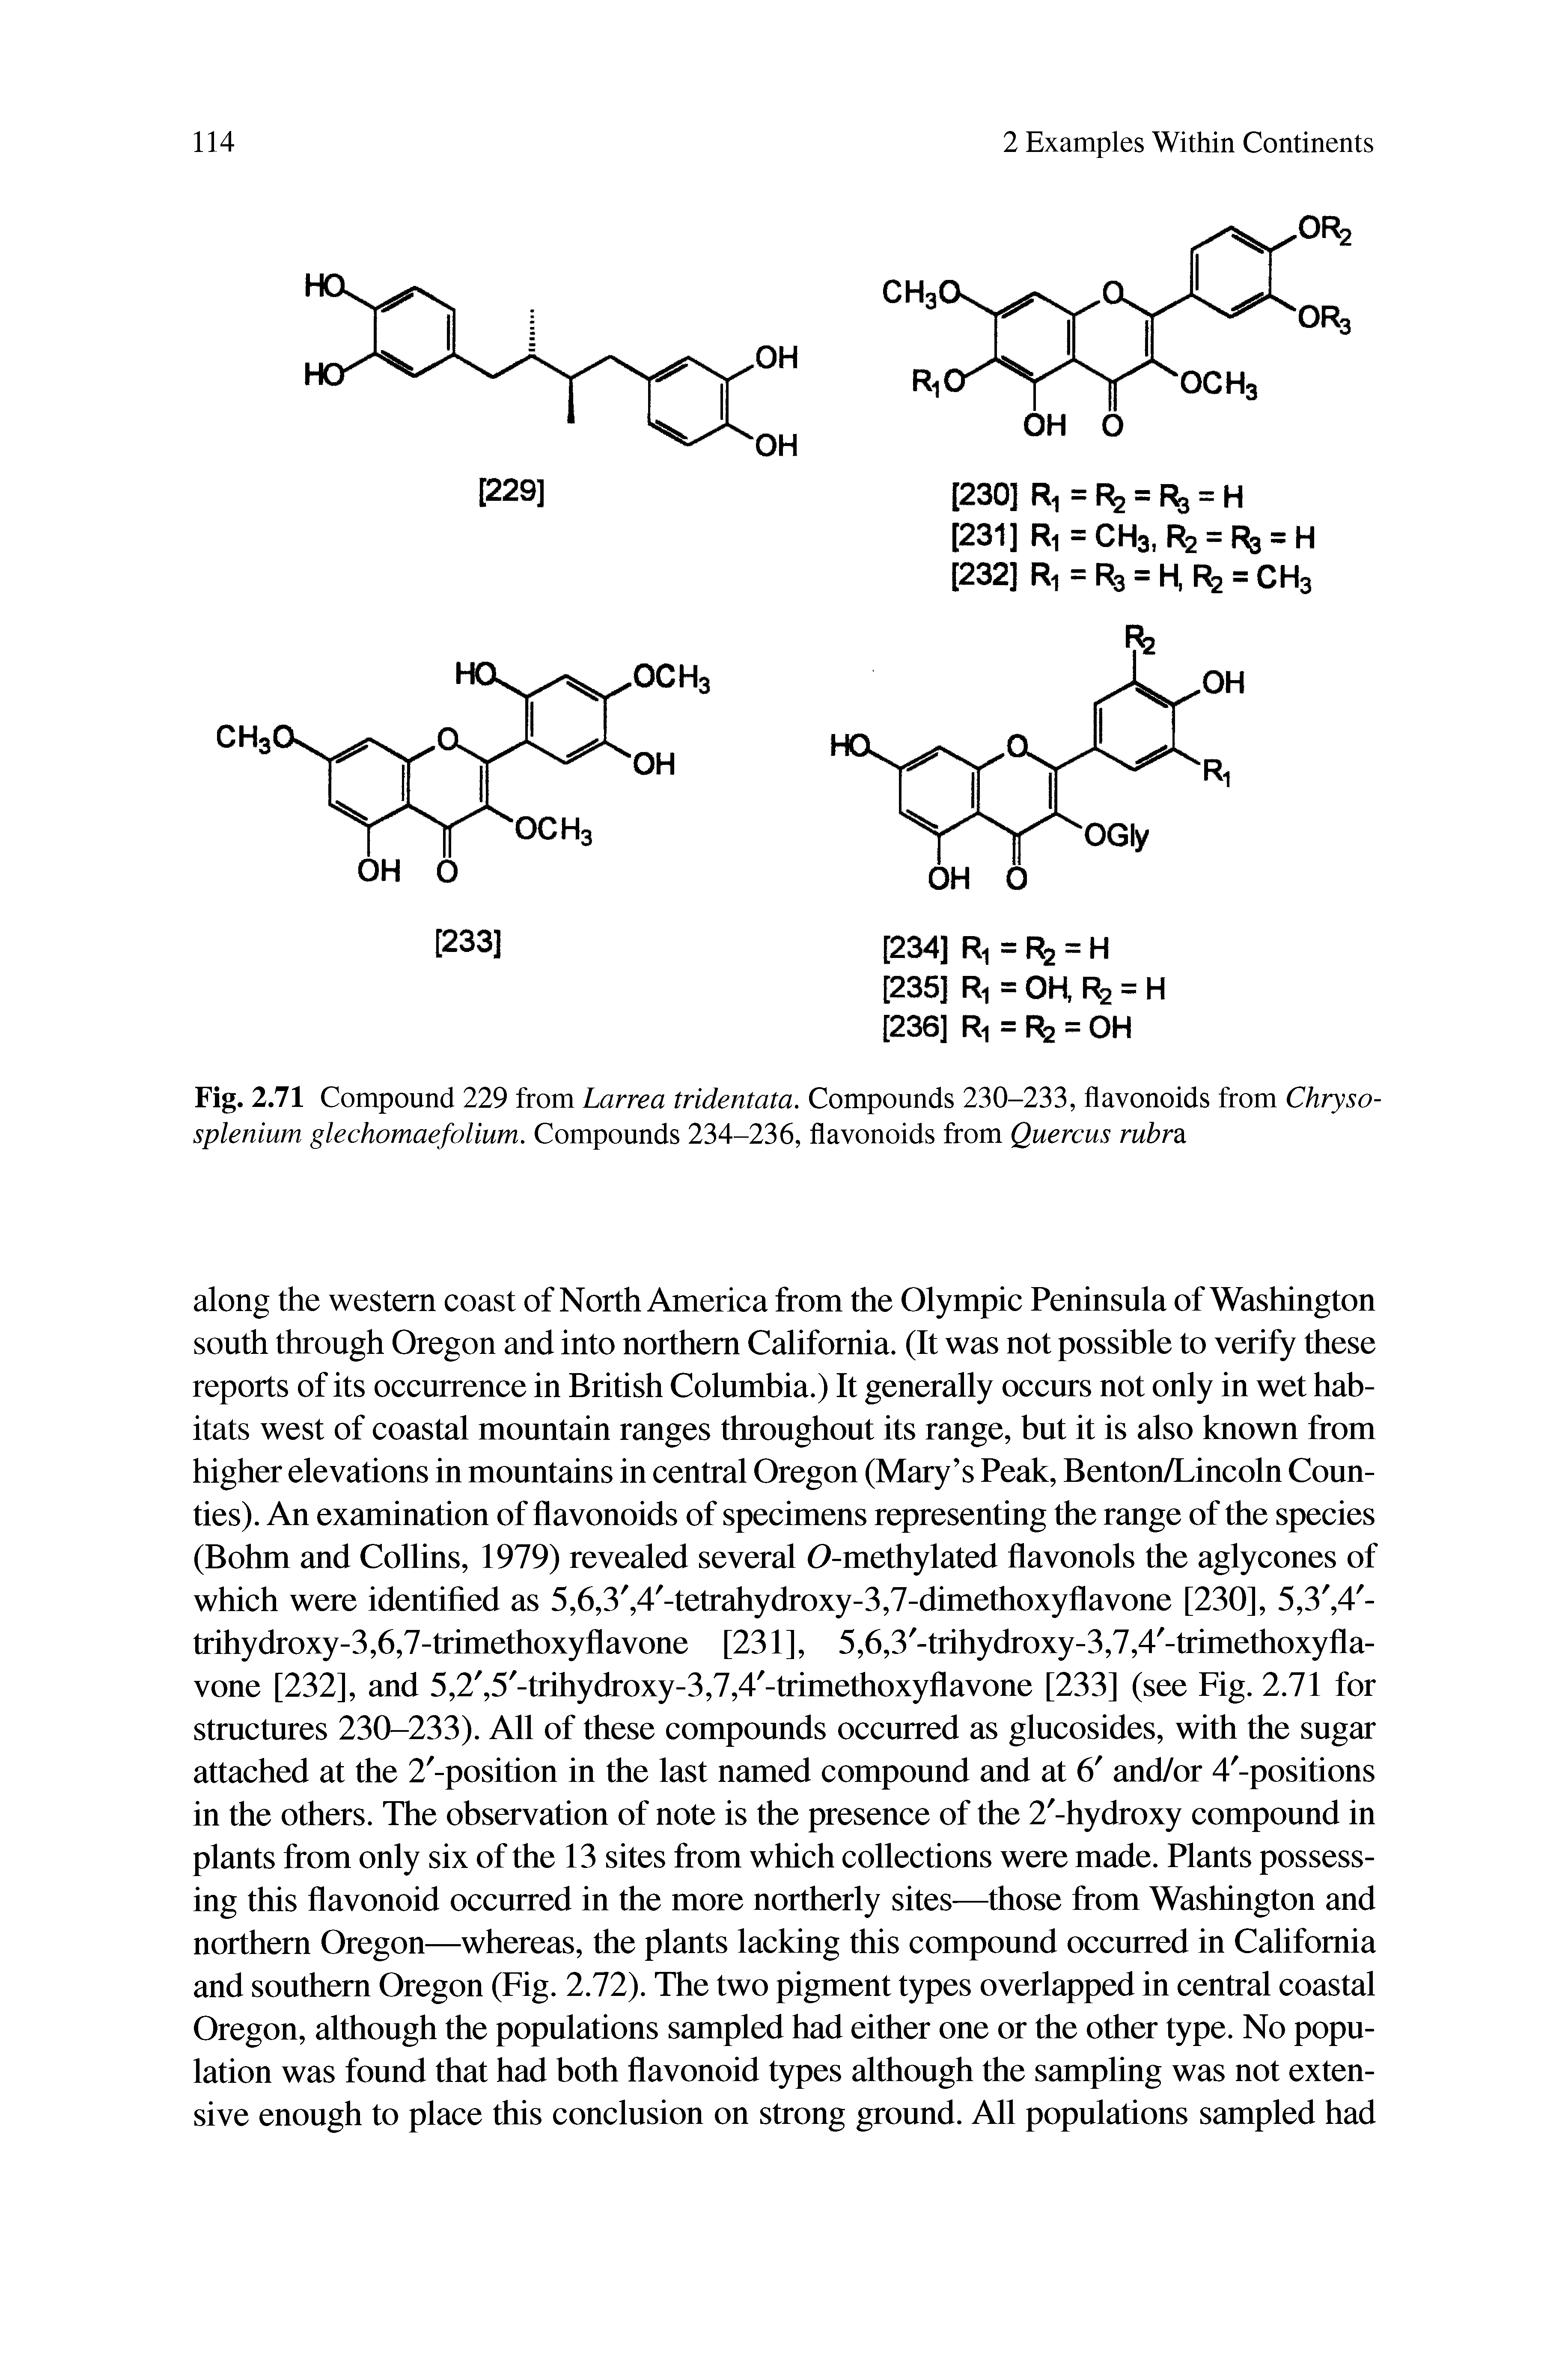 Fig. 2.71 Compound 229 from Larrea tridentata. Compounds 230-233, flavonoids from Chryso-splenium glechomaefolium. Compounds 234-236, flavonoids from Quercus rubrsi...